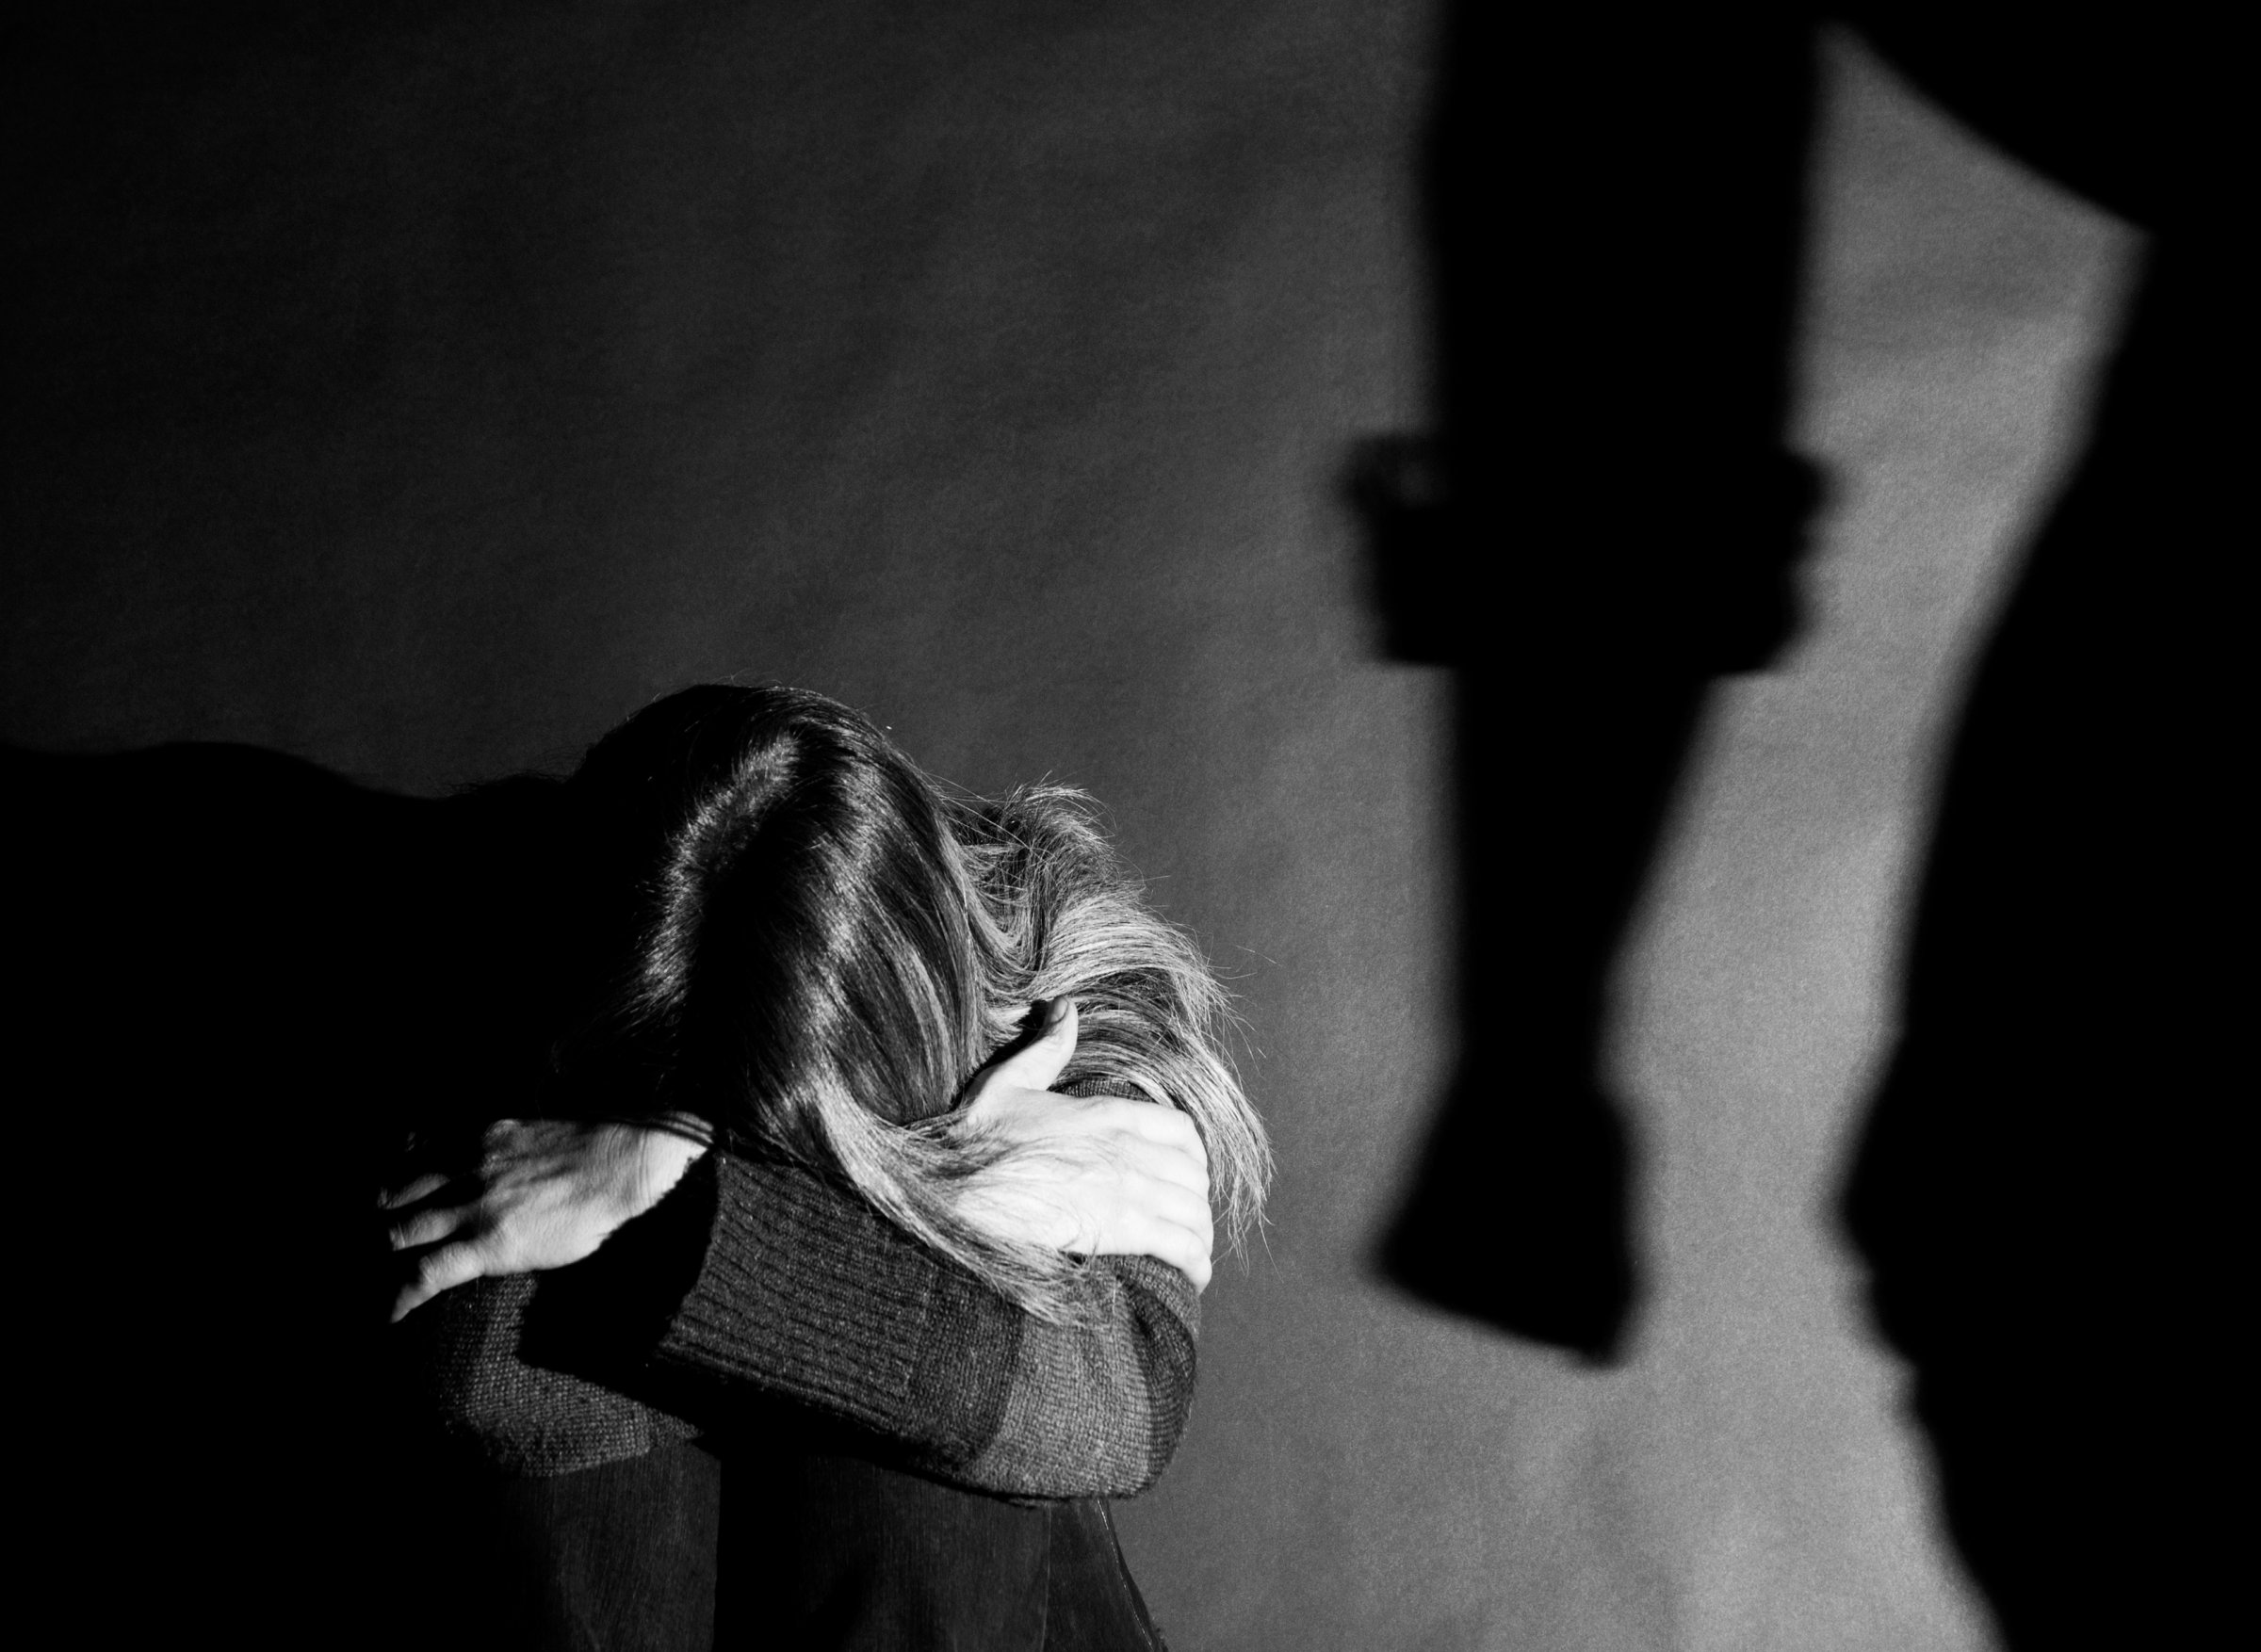 Domestic violence - Abuse